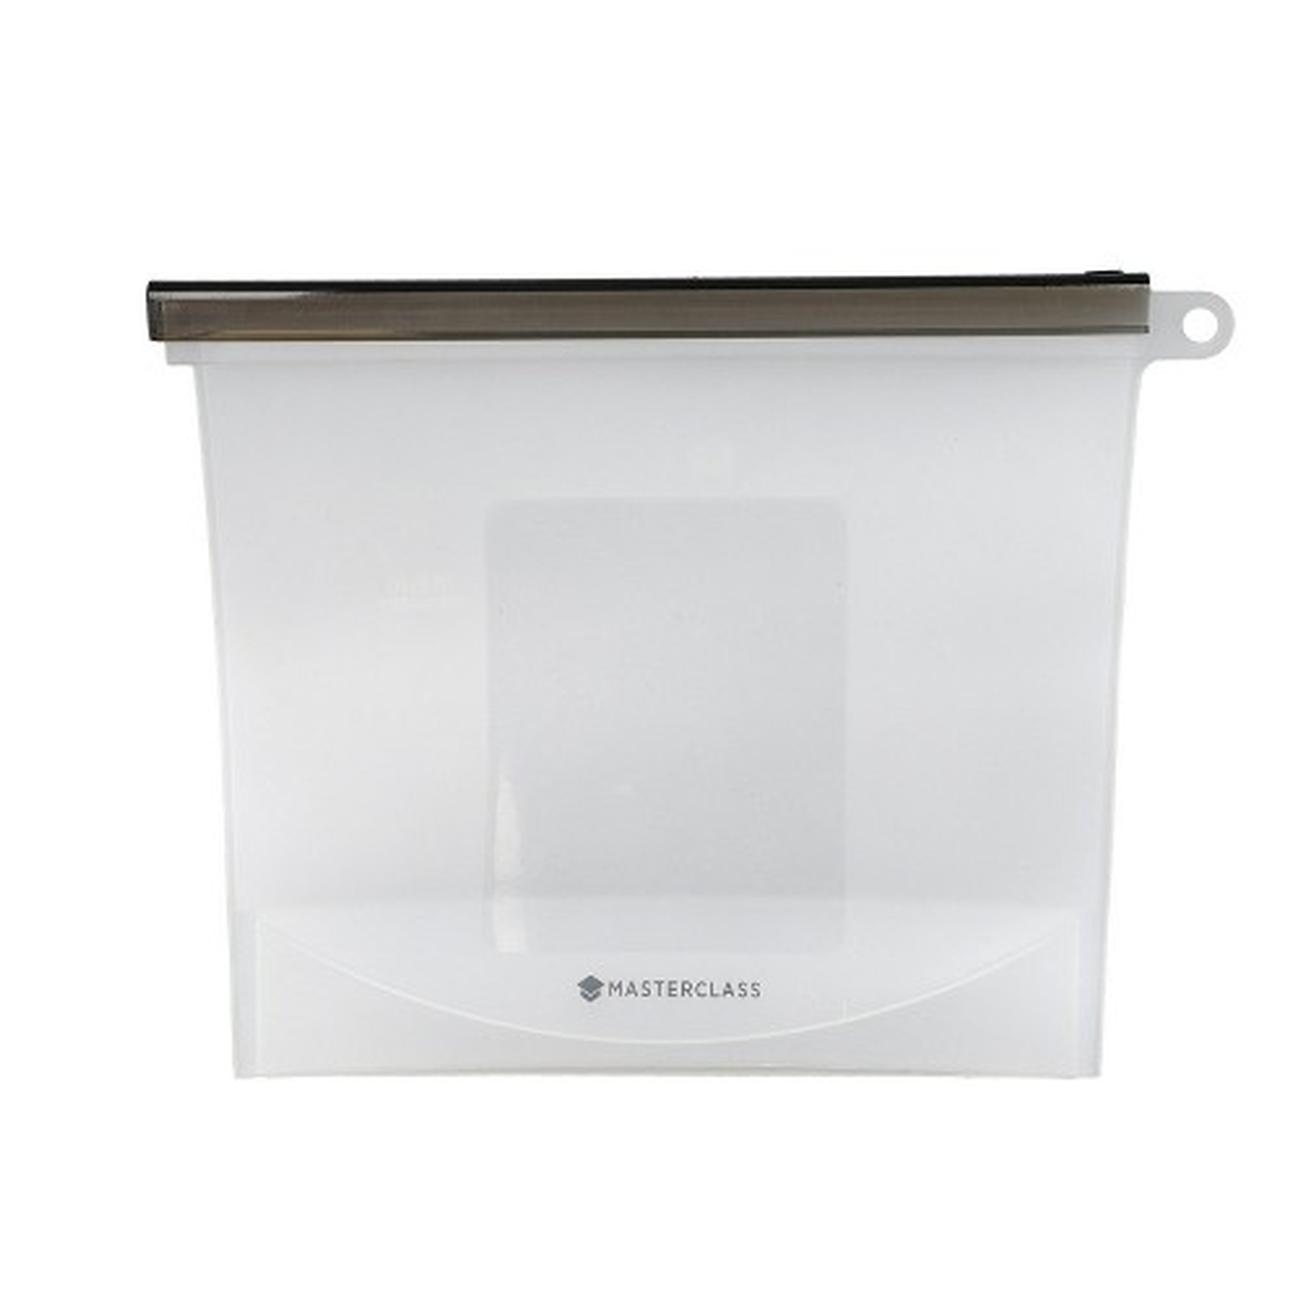 masterclass-reusable-silicone-storage-bag-1000ml - MasterClass Reusable Silicone Food Bag 1000ml